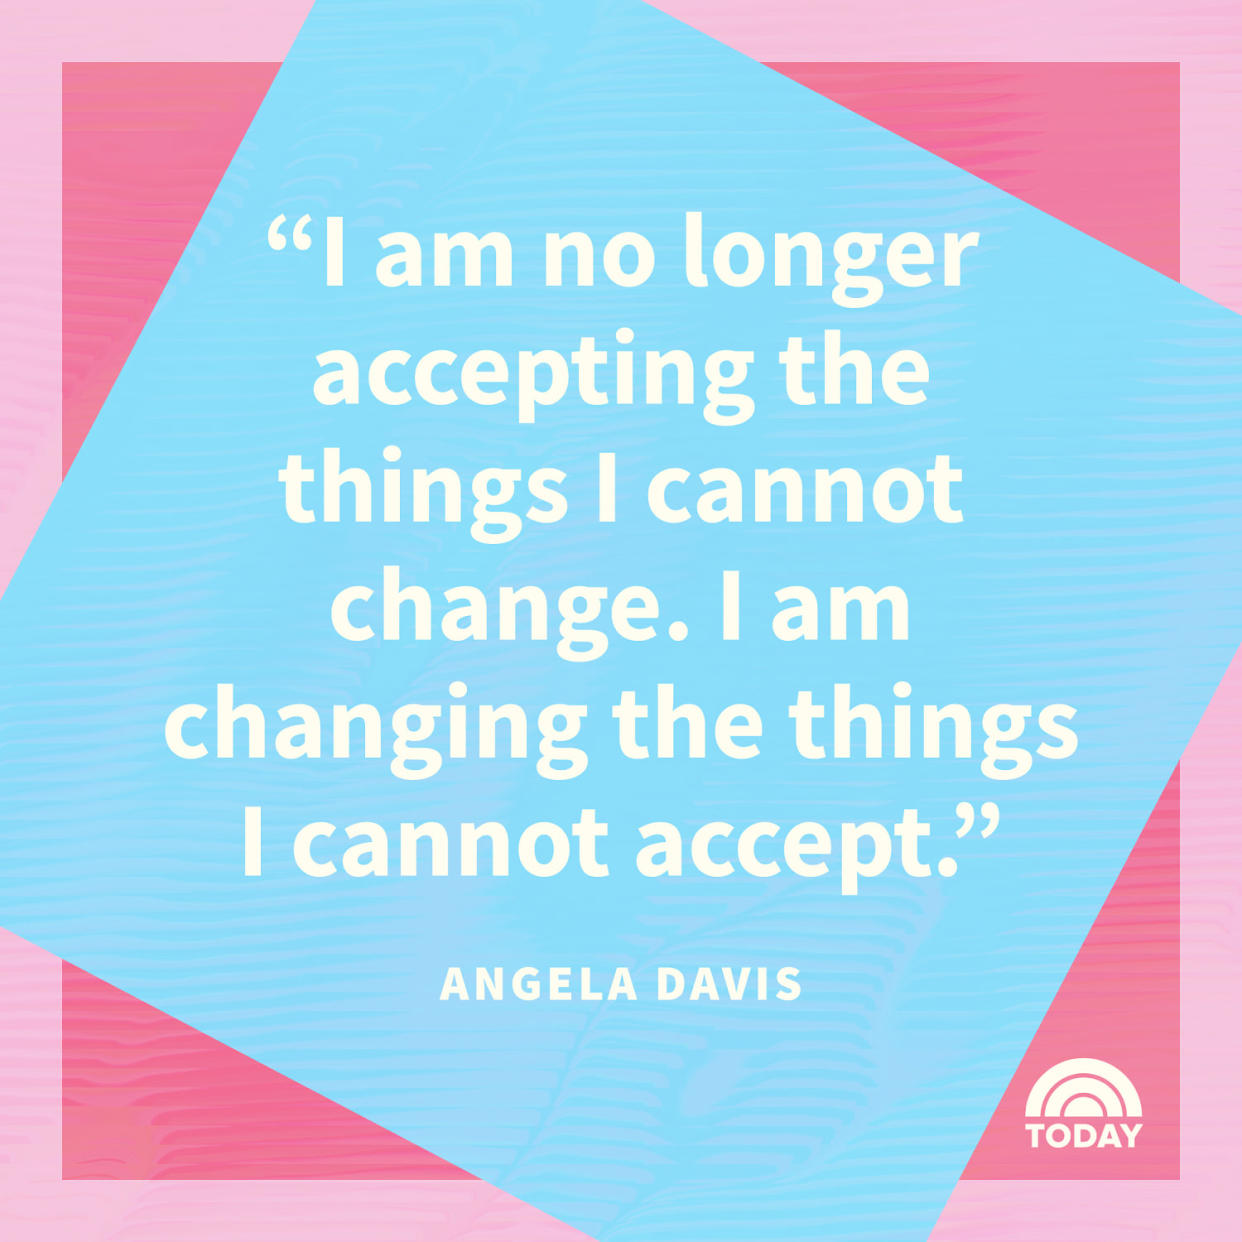 quote from Angela Davis